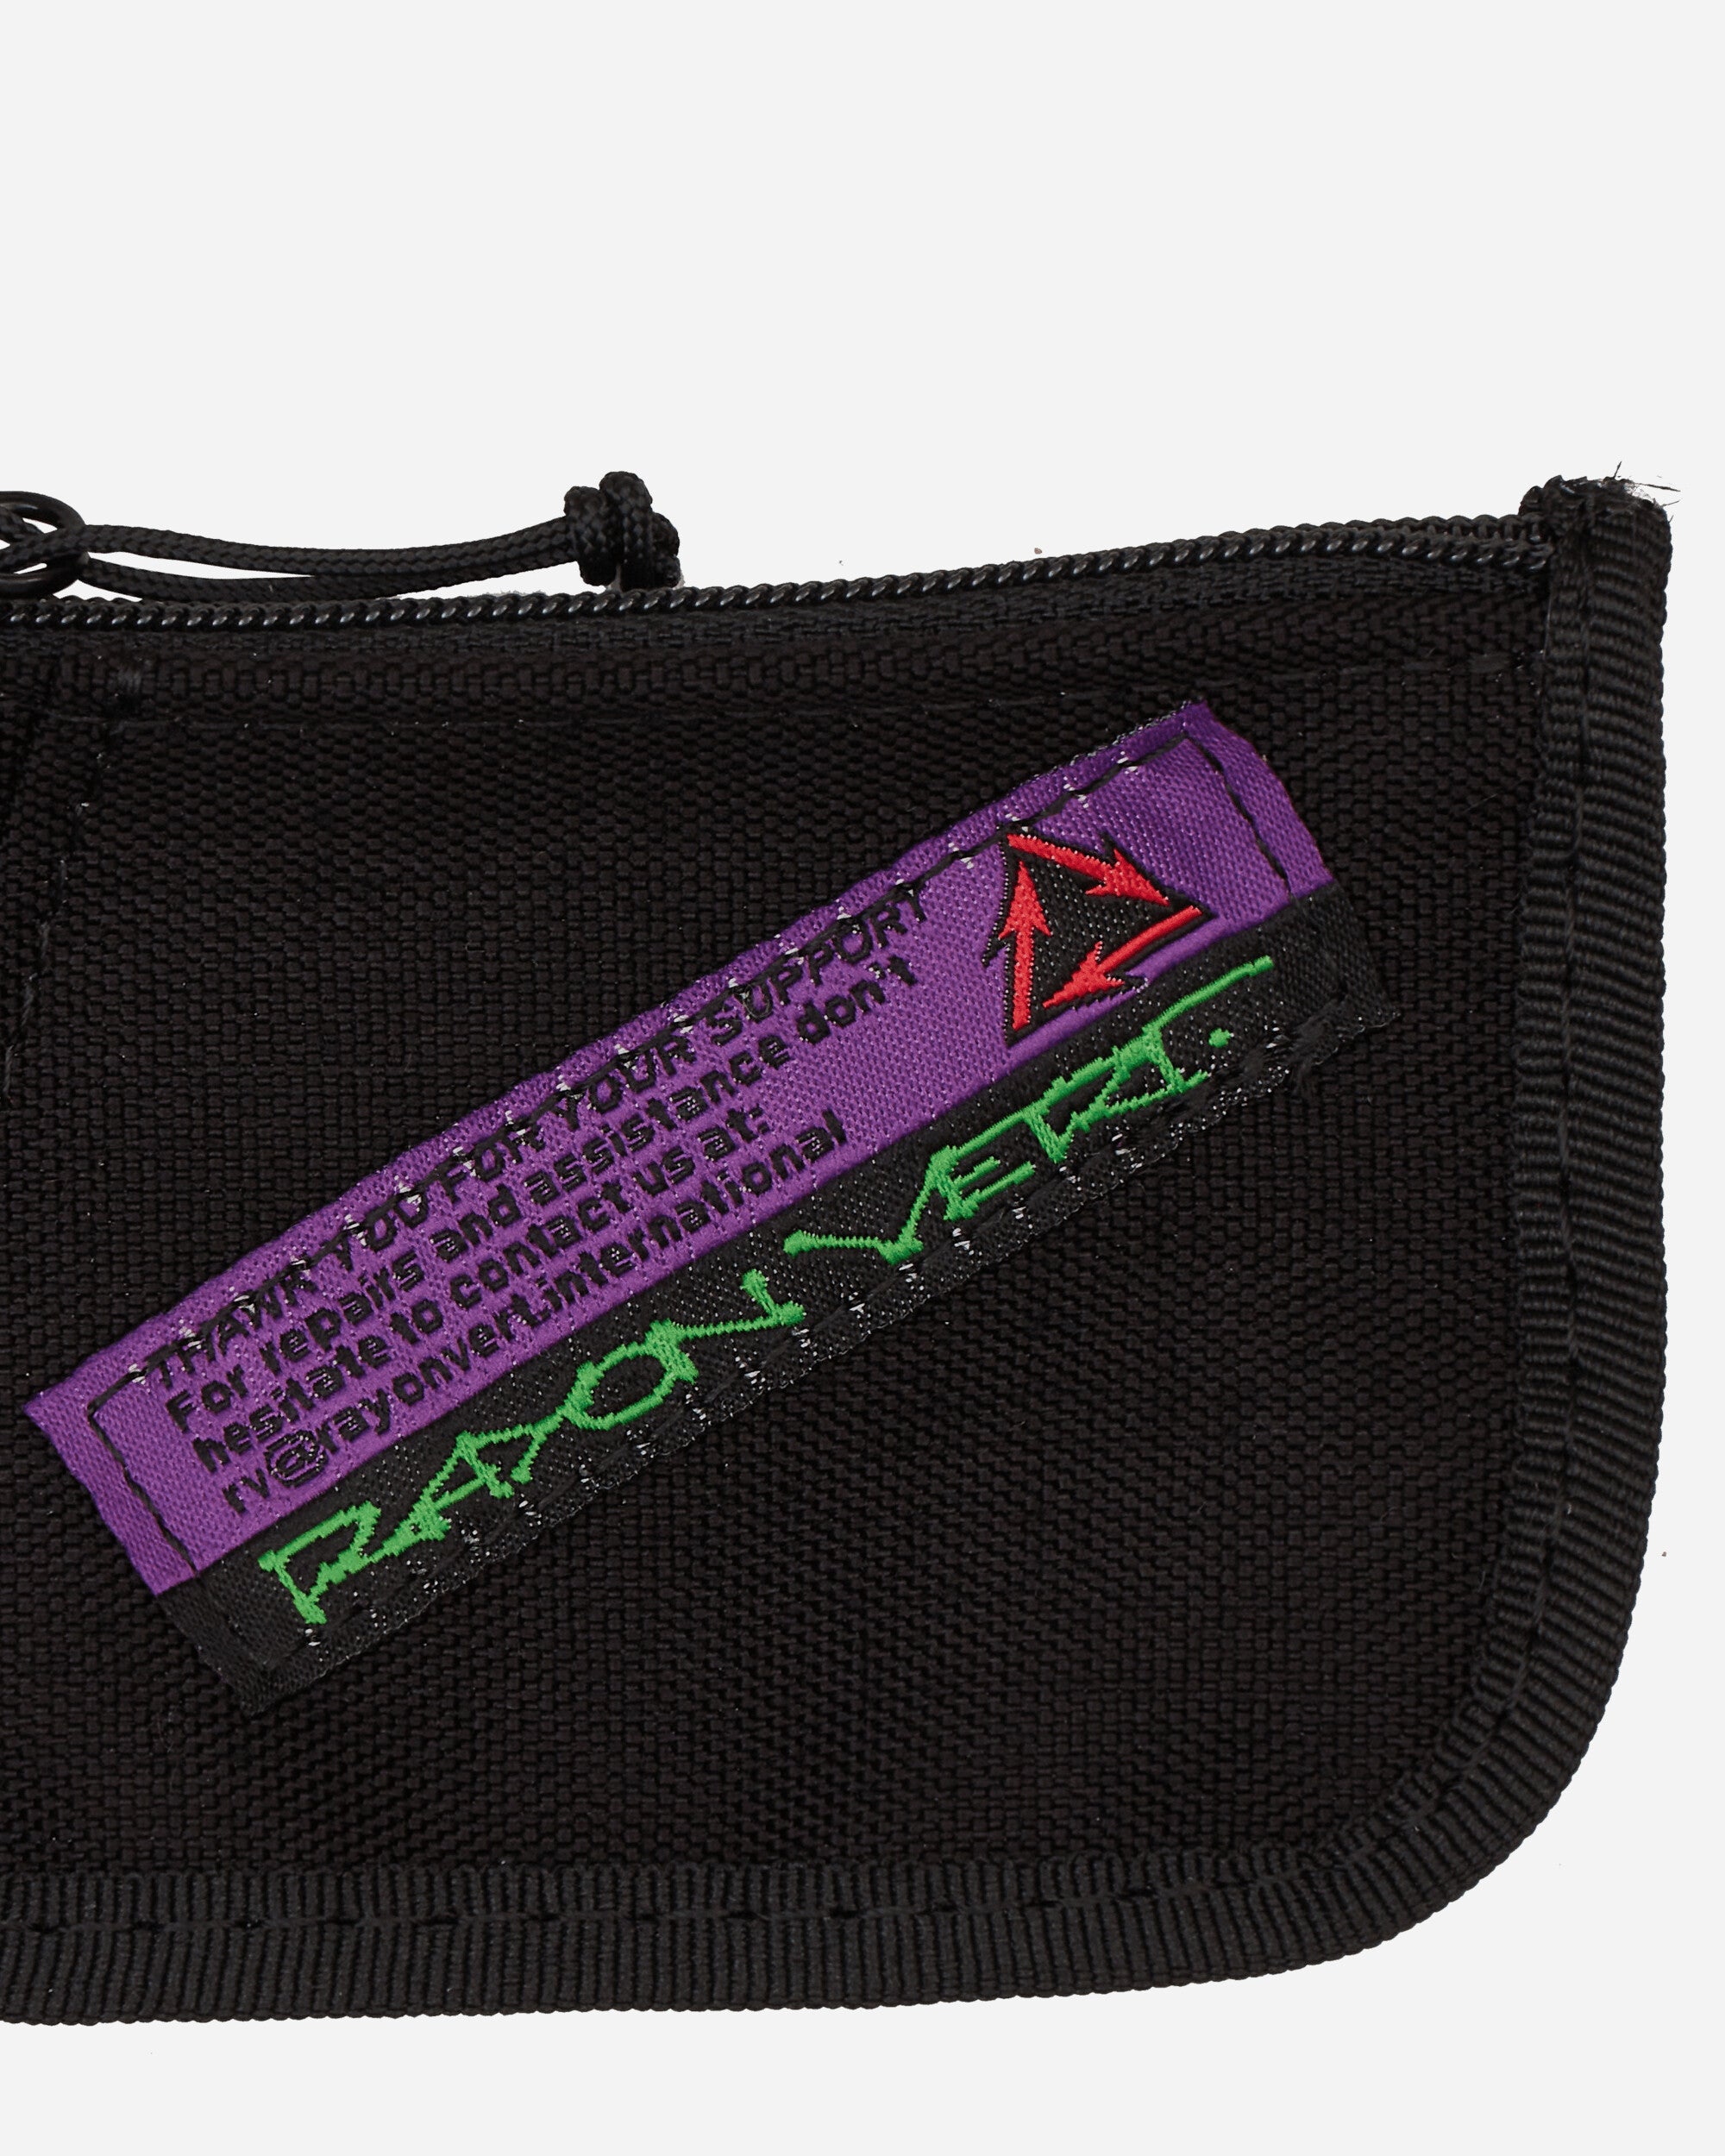 Rayon Vert Ultralight Wallet Cordura Black Wallets and Cardholders Wallets RVS3-BG35 1